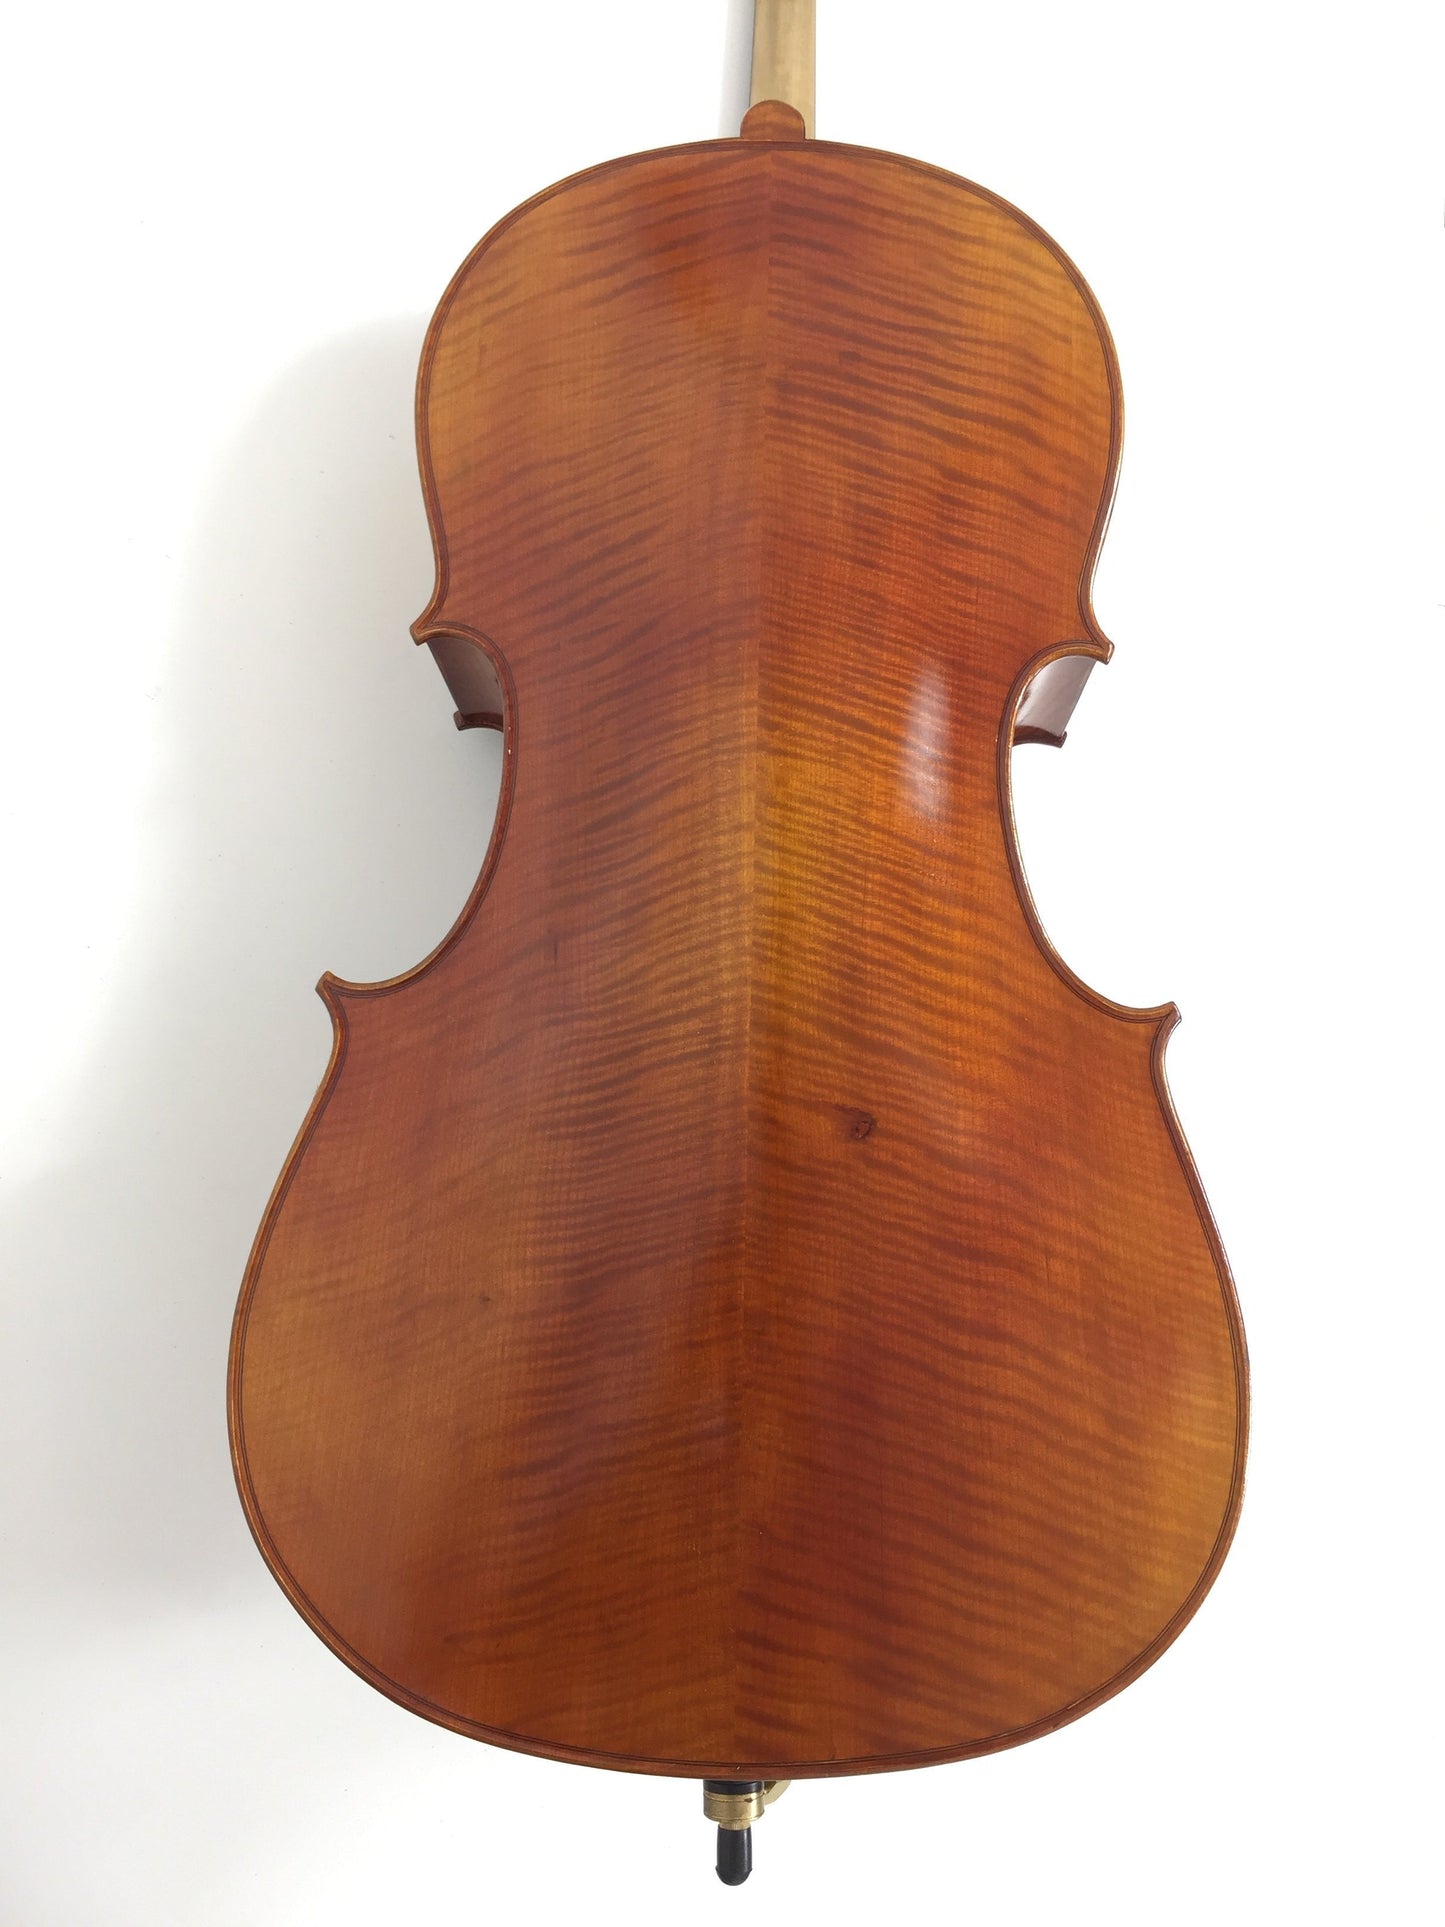 Symphony SJCE04A 4/4 Solid wood handmade cello outfit, ebony fittings